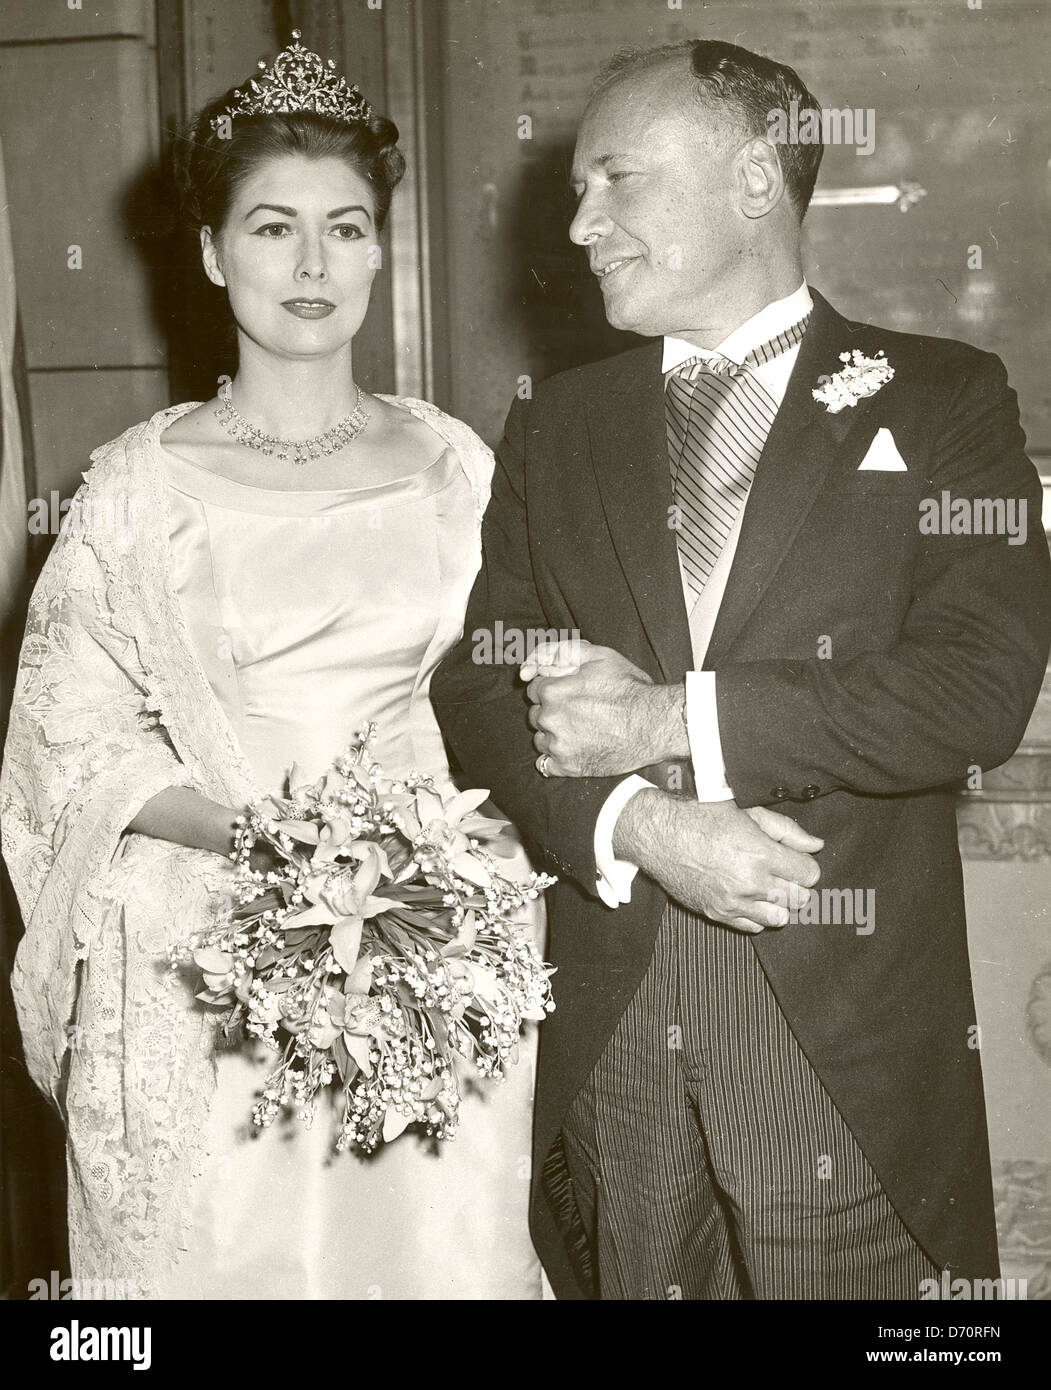 Mr & Mrs. Robert L. Gardiner at wedding, New York,1961 Stock Photo